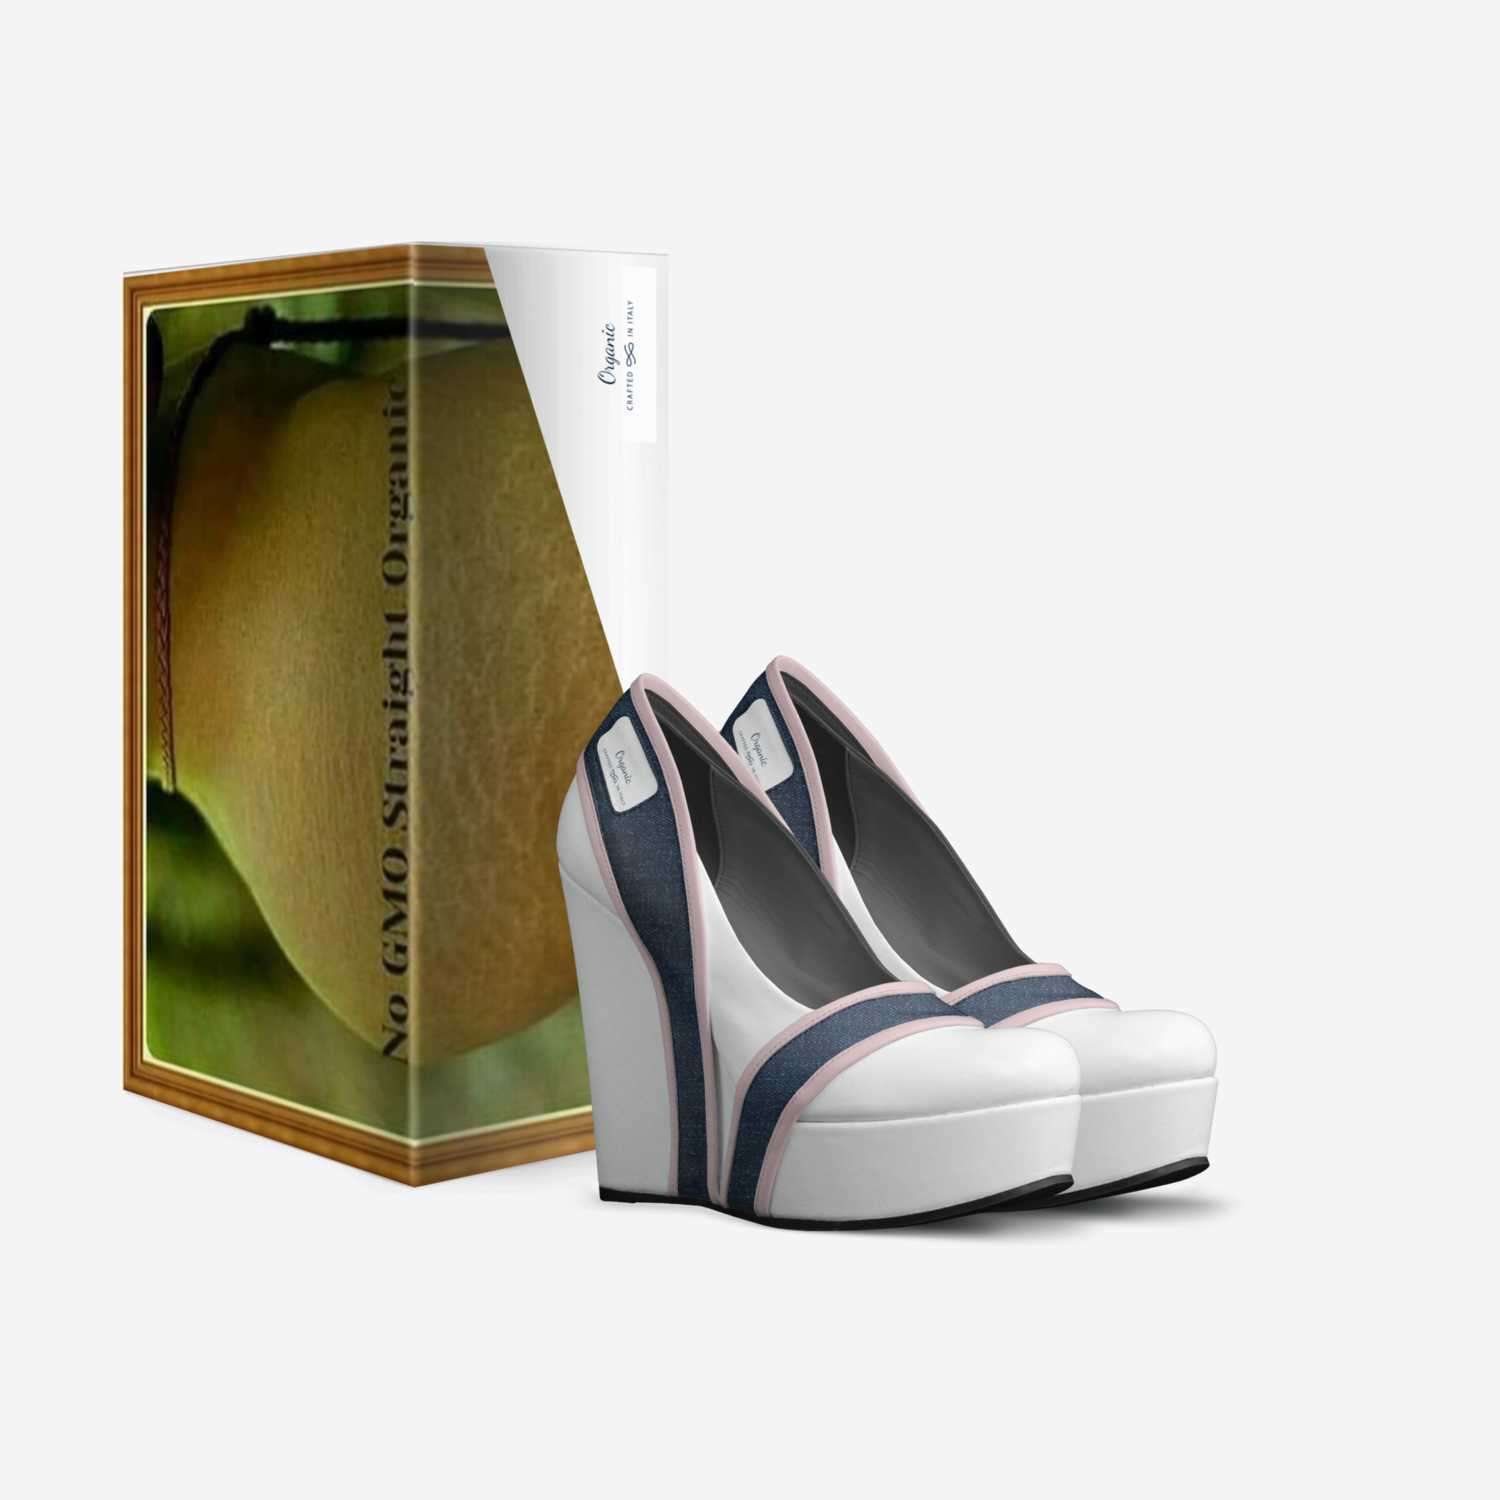 Organic custom made in Italy shoes by Moffatt Gordon | Box view